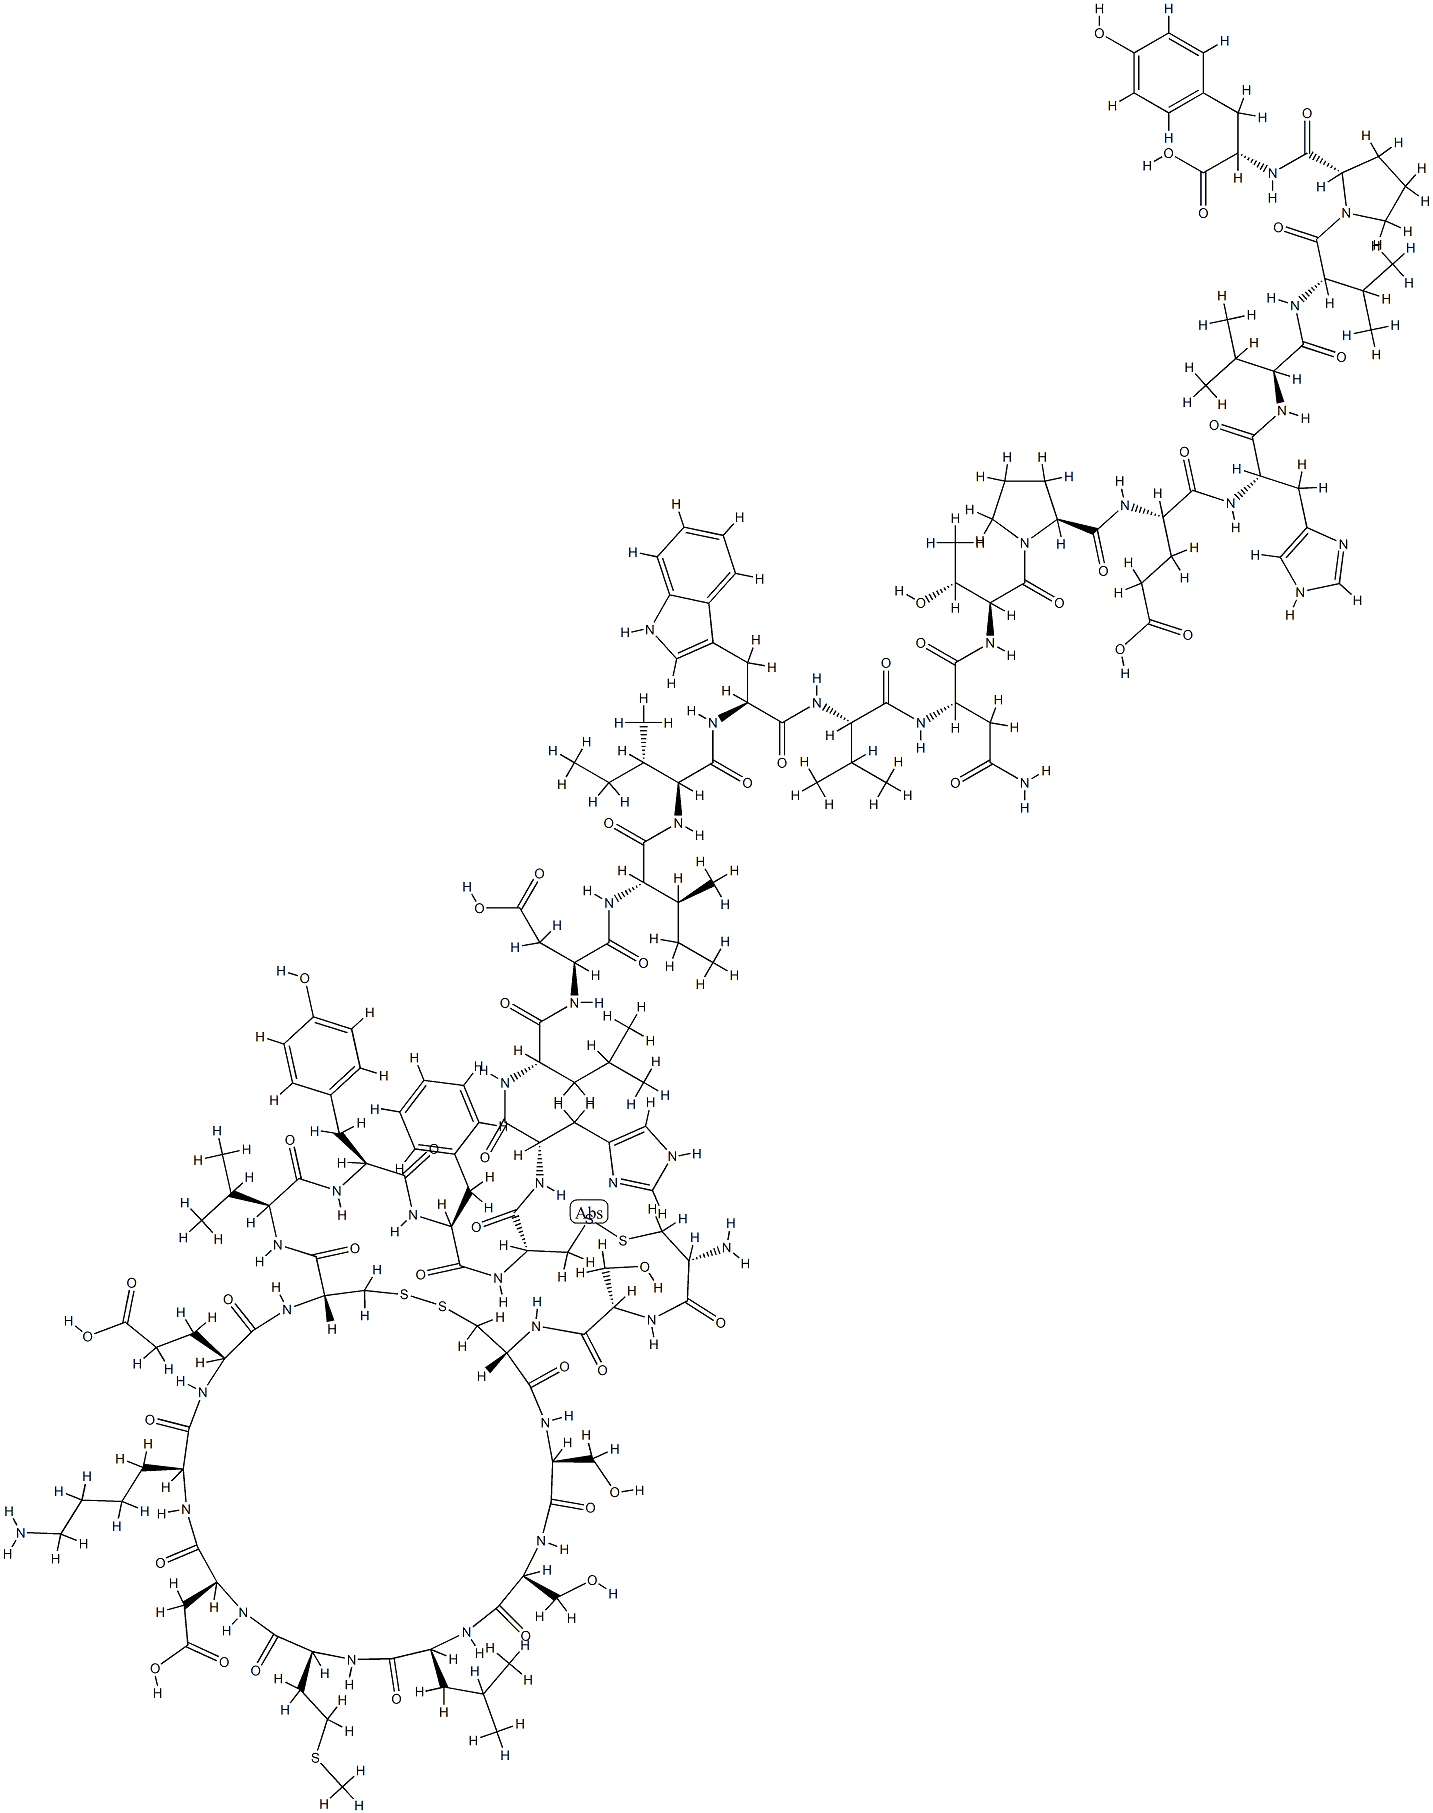 BIG ENDOTHELIN-1 (1-31) (HUMAN, BOVINE) Structure